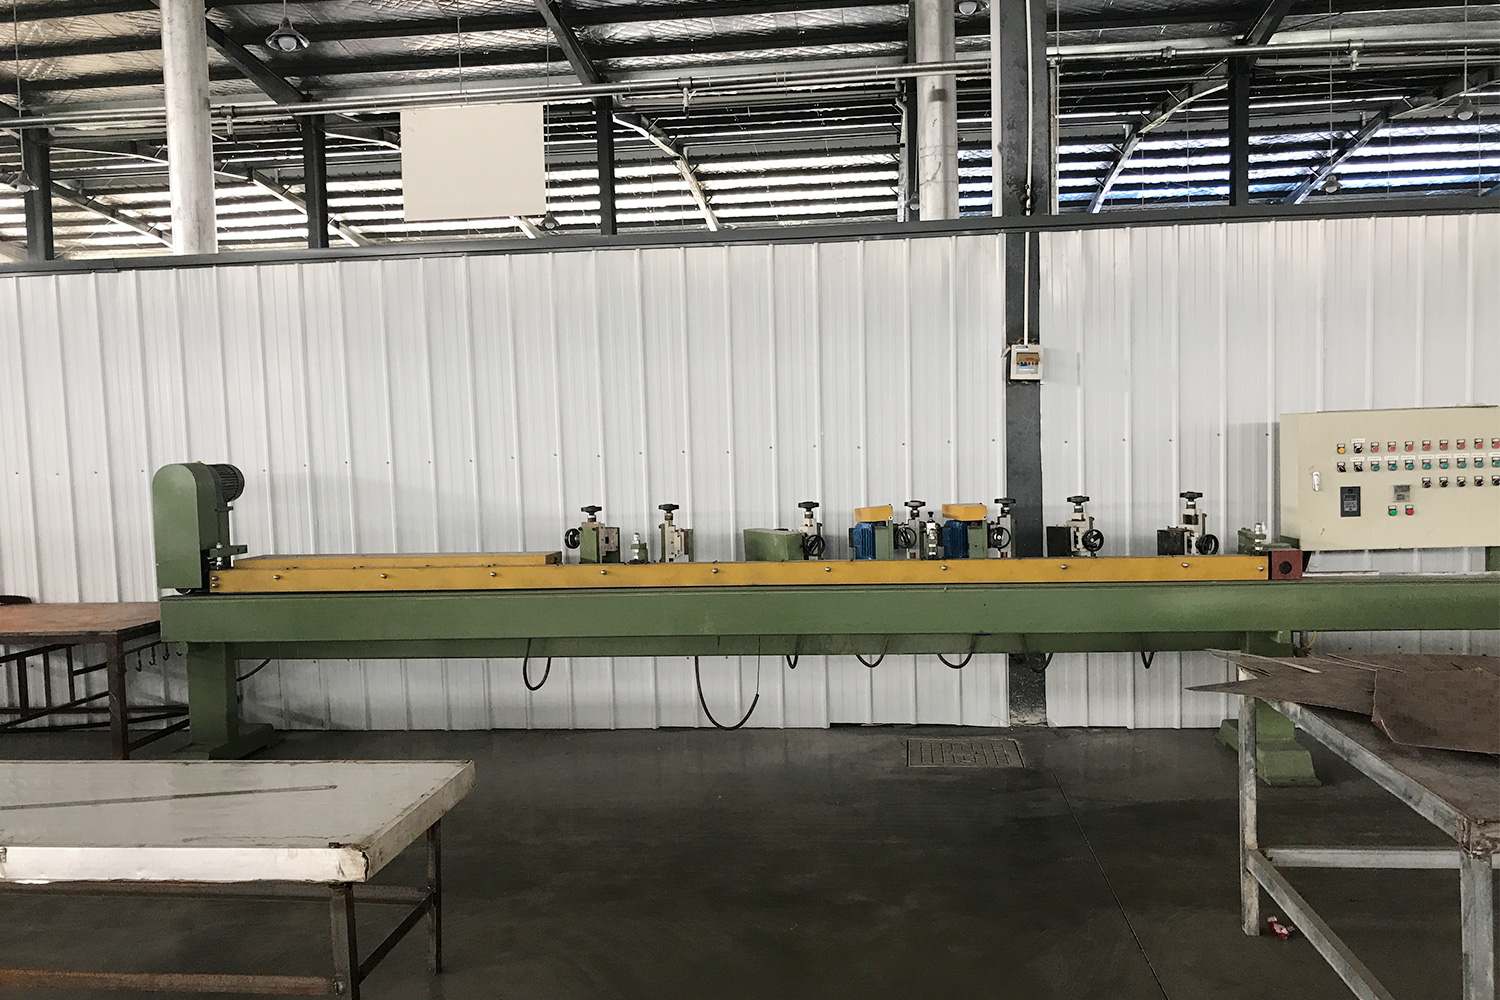 New sanding belt production line was started